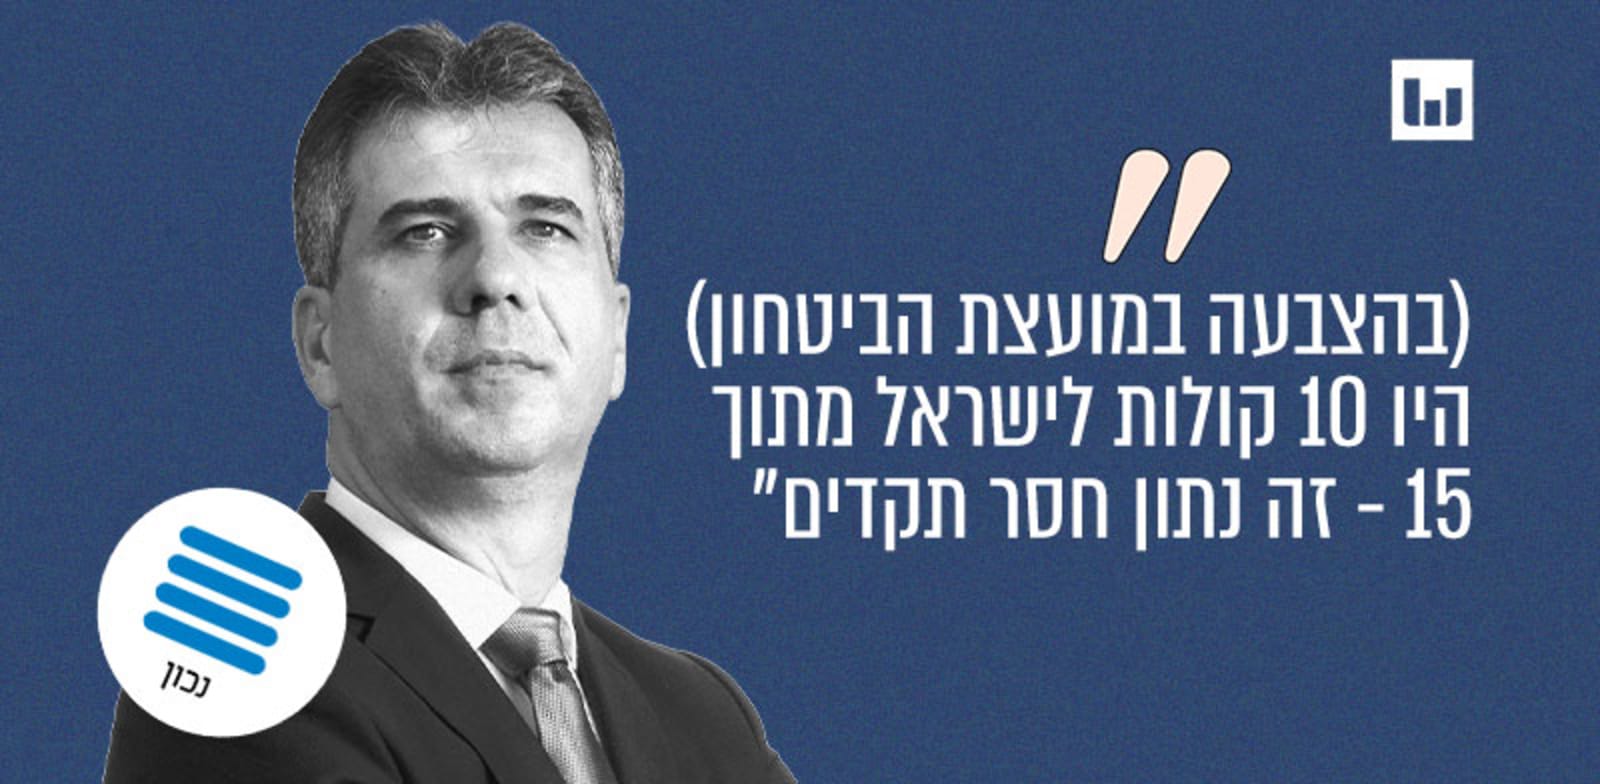 שר החוץ אלי כהן, הליכוד (שבע בערב, ערוץ 14, 12.11.23) / צילום: איל יצהר